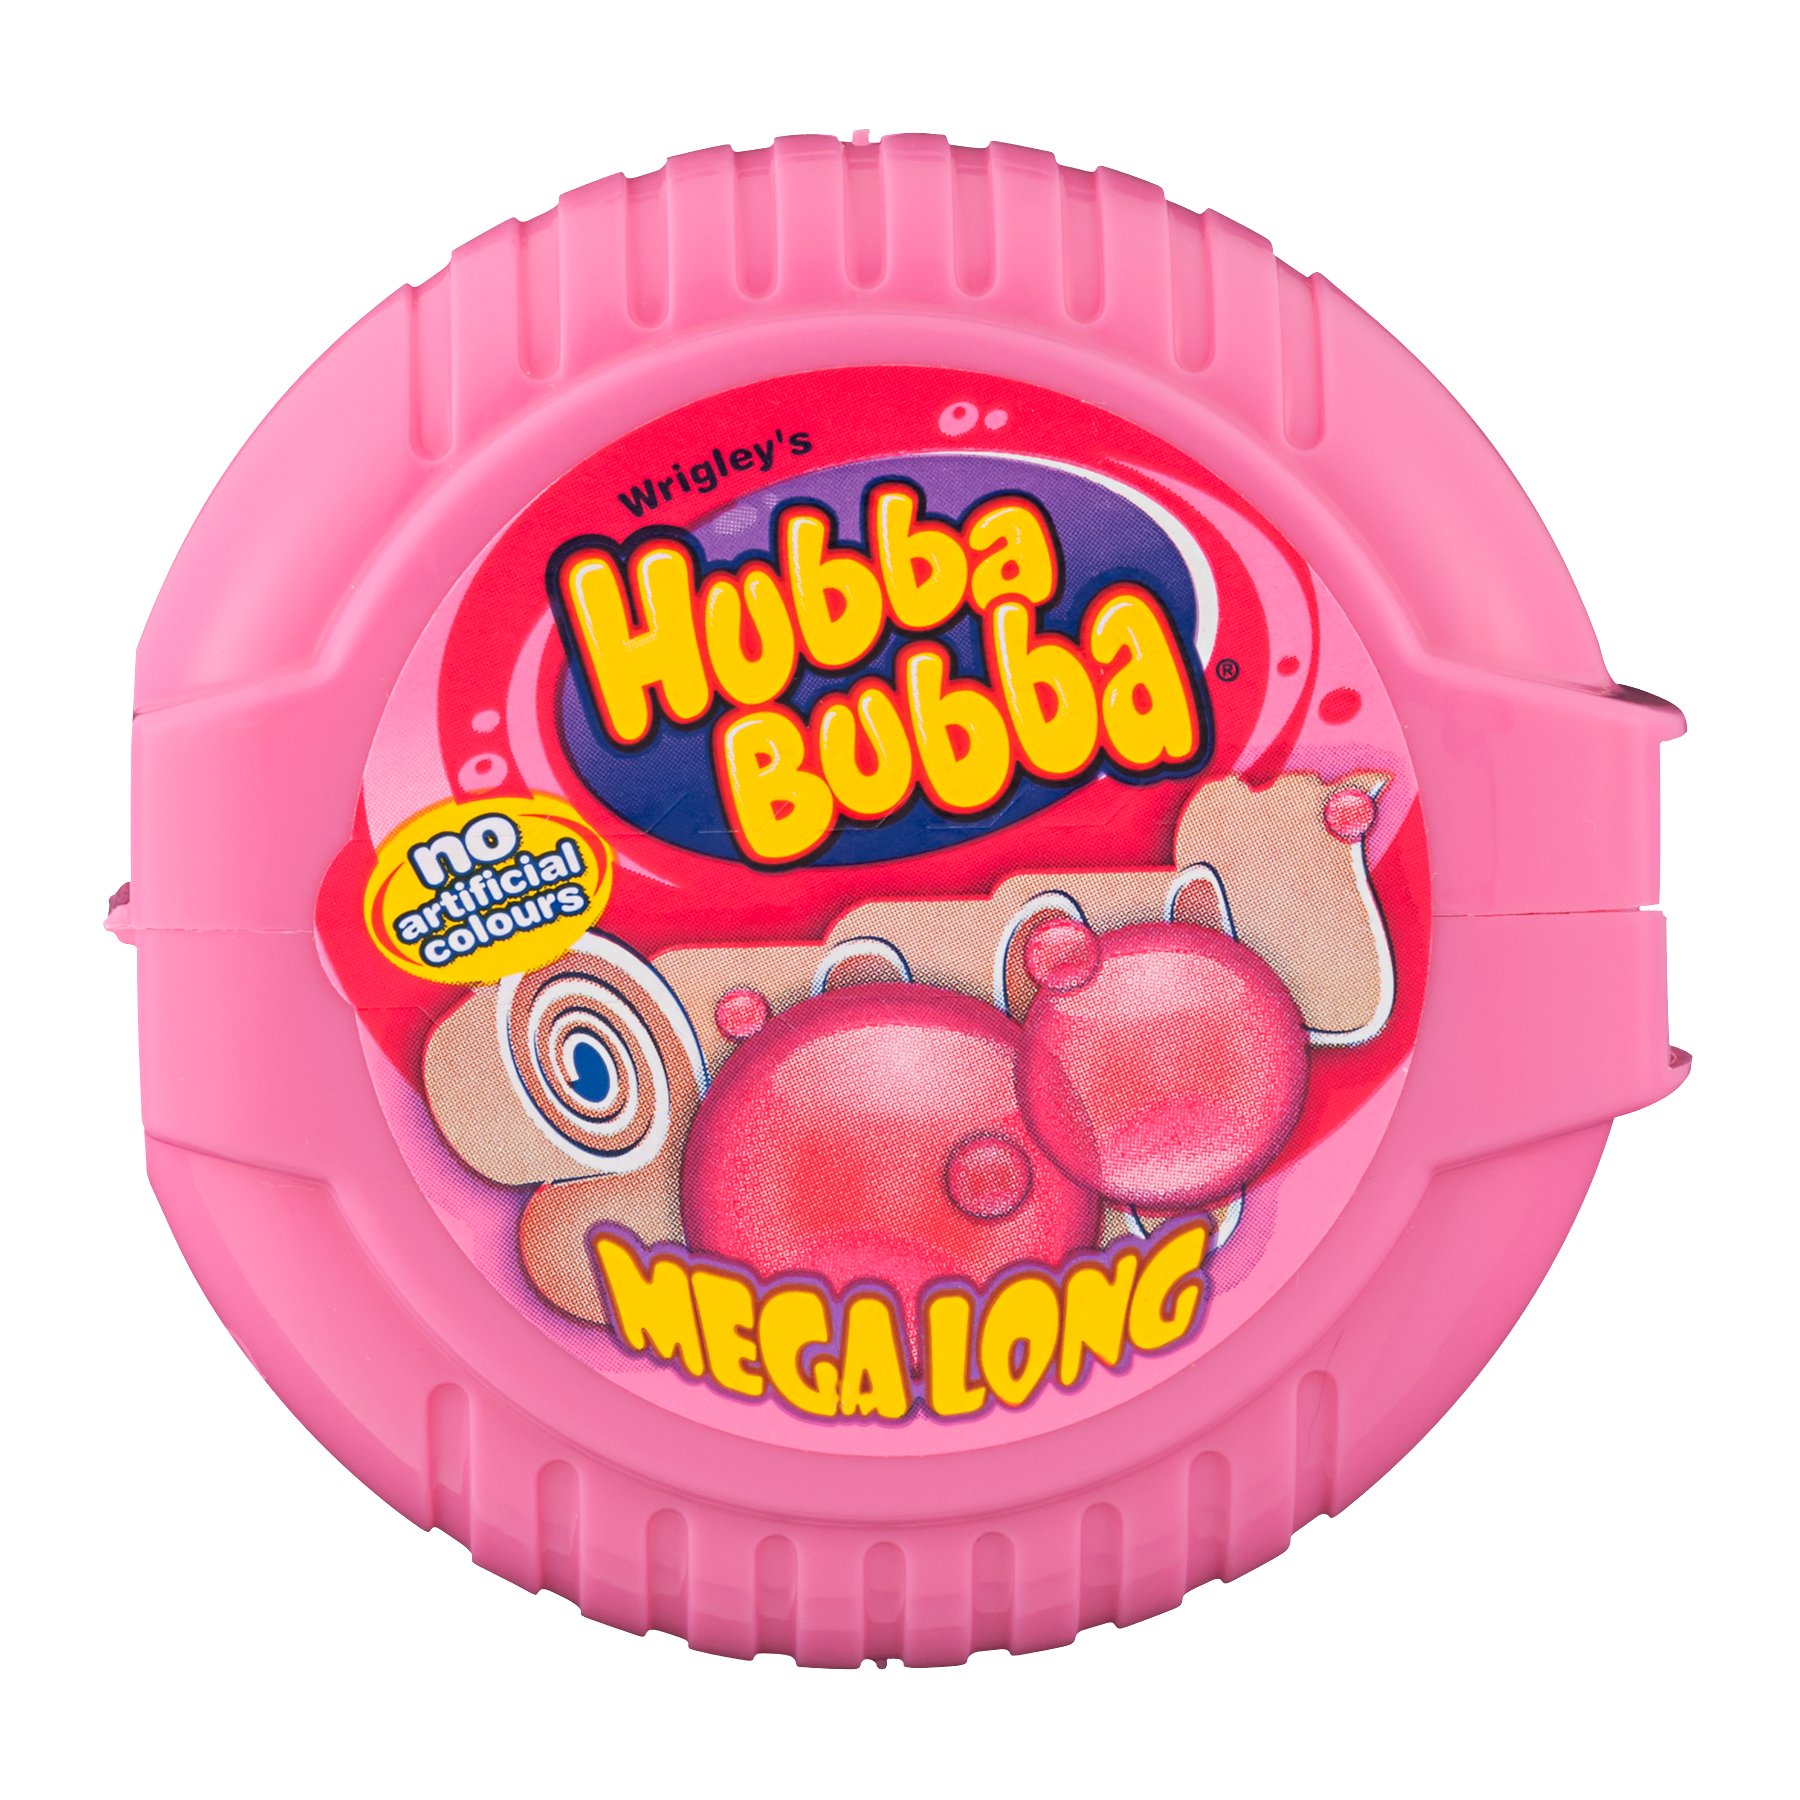 Hubba Bubba Kosher Mega Long Fancy Fruit Chewing Gum - Shop Gum & Mints at  H-E-B